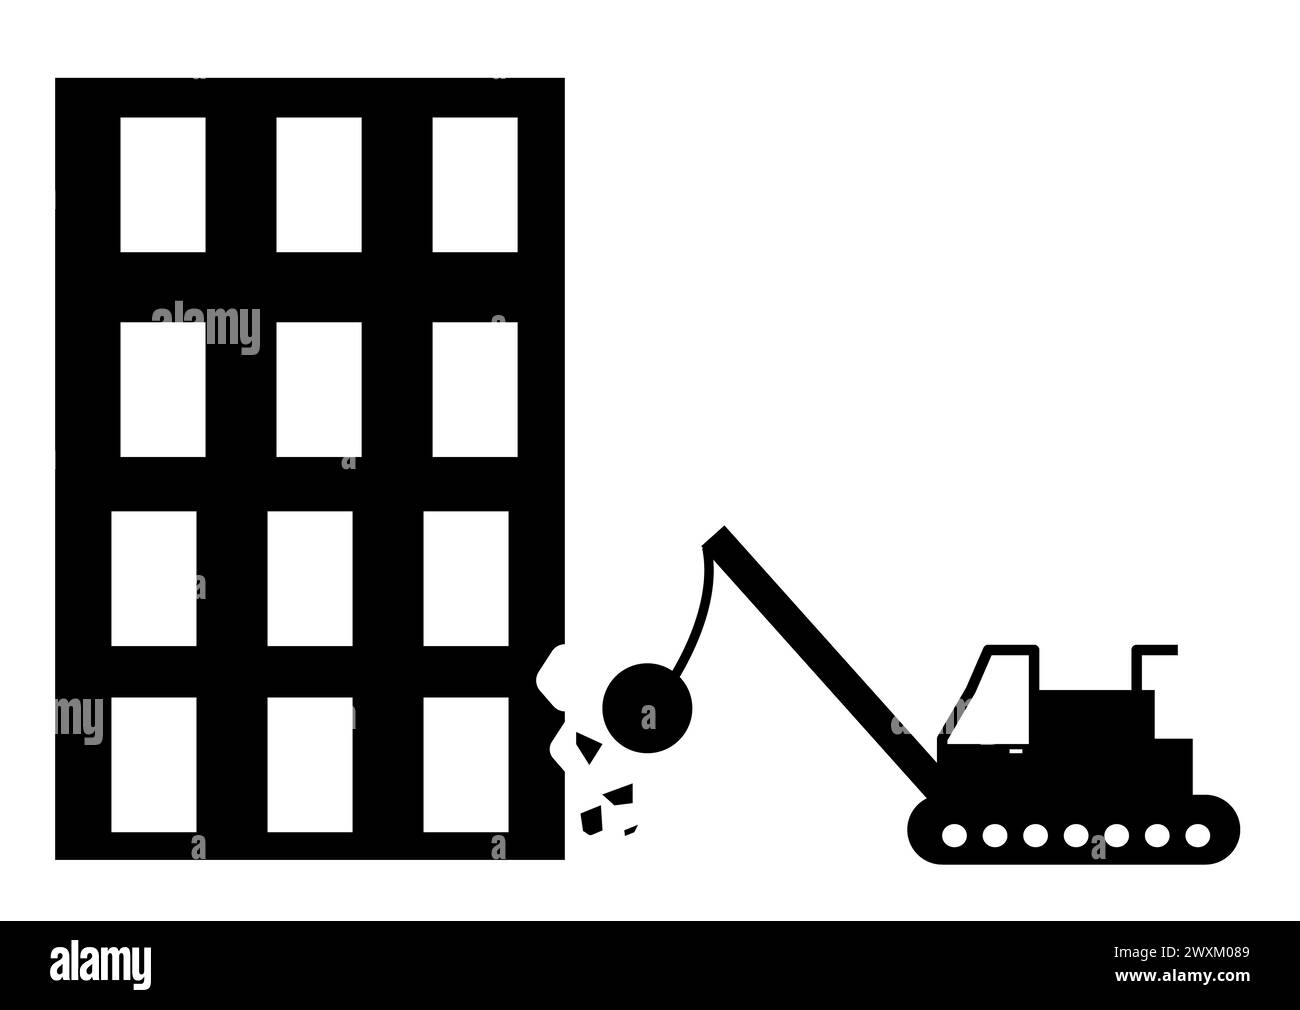 Destroyed building icon. Demolition Worker Demolish Building sign. Demolition symbol. flat style. Stock Photo